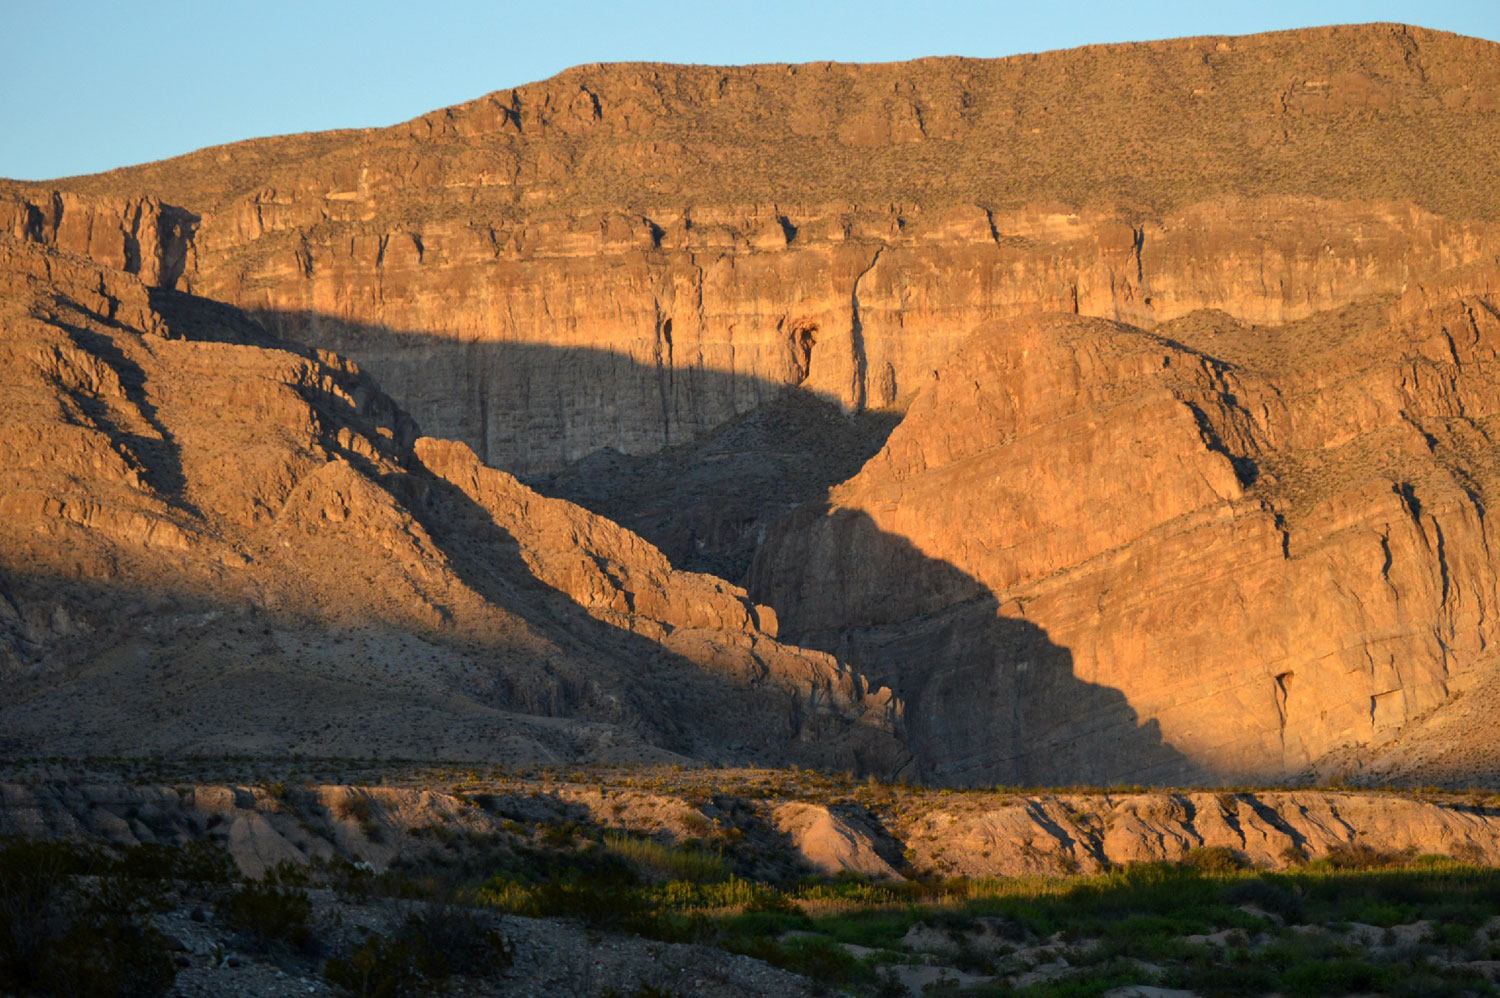 Cliffs at sunrise along the Rio Grande River near Boquillas, Mexico.